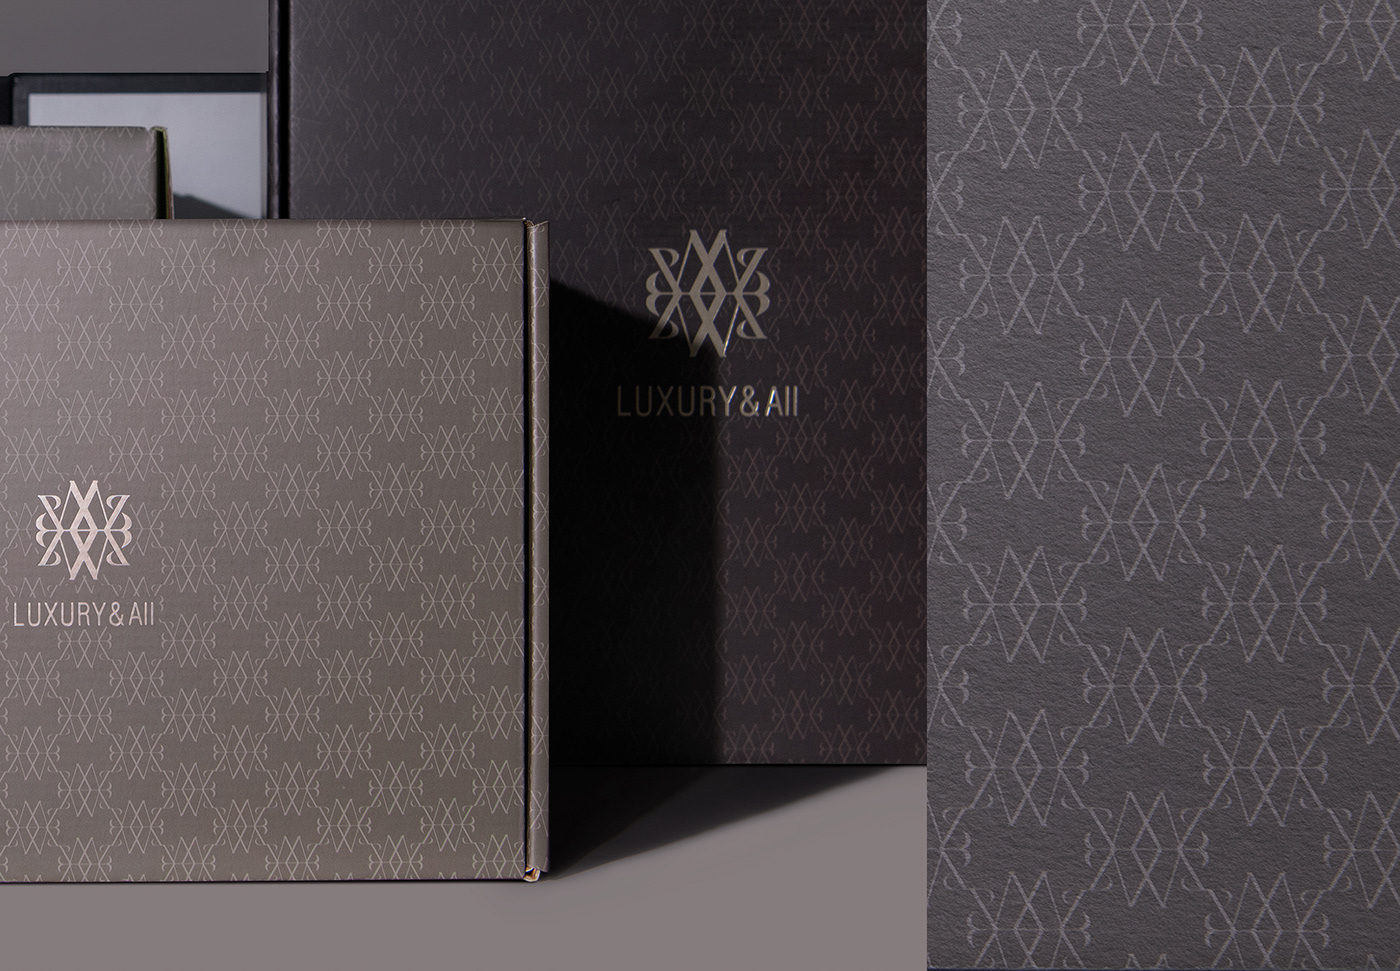 Hidesign hotfoil luxurypackagedesign packagedesign Packaging patterndesign patternpackagedesign redesign